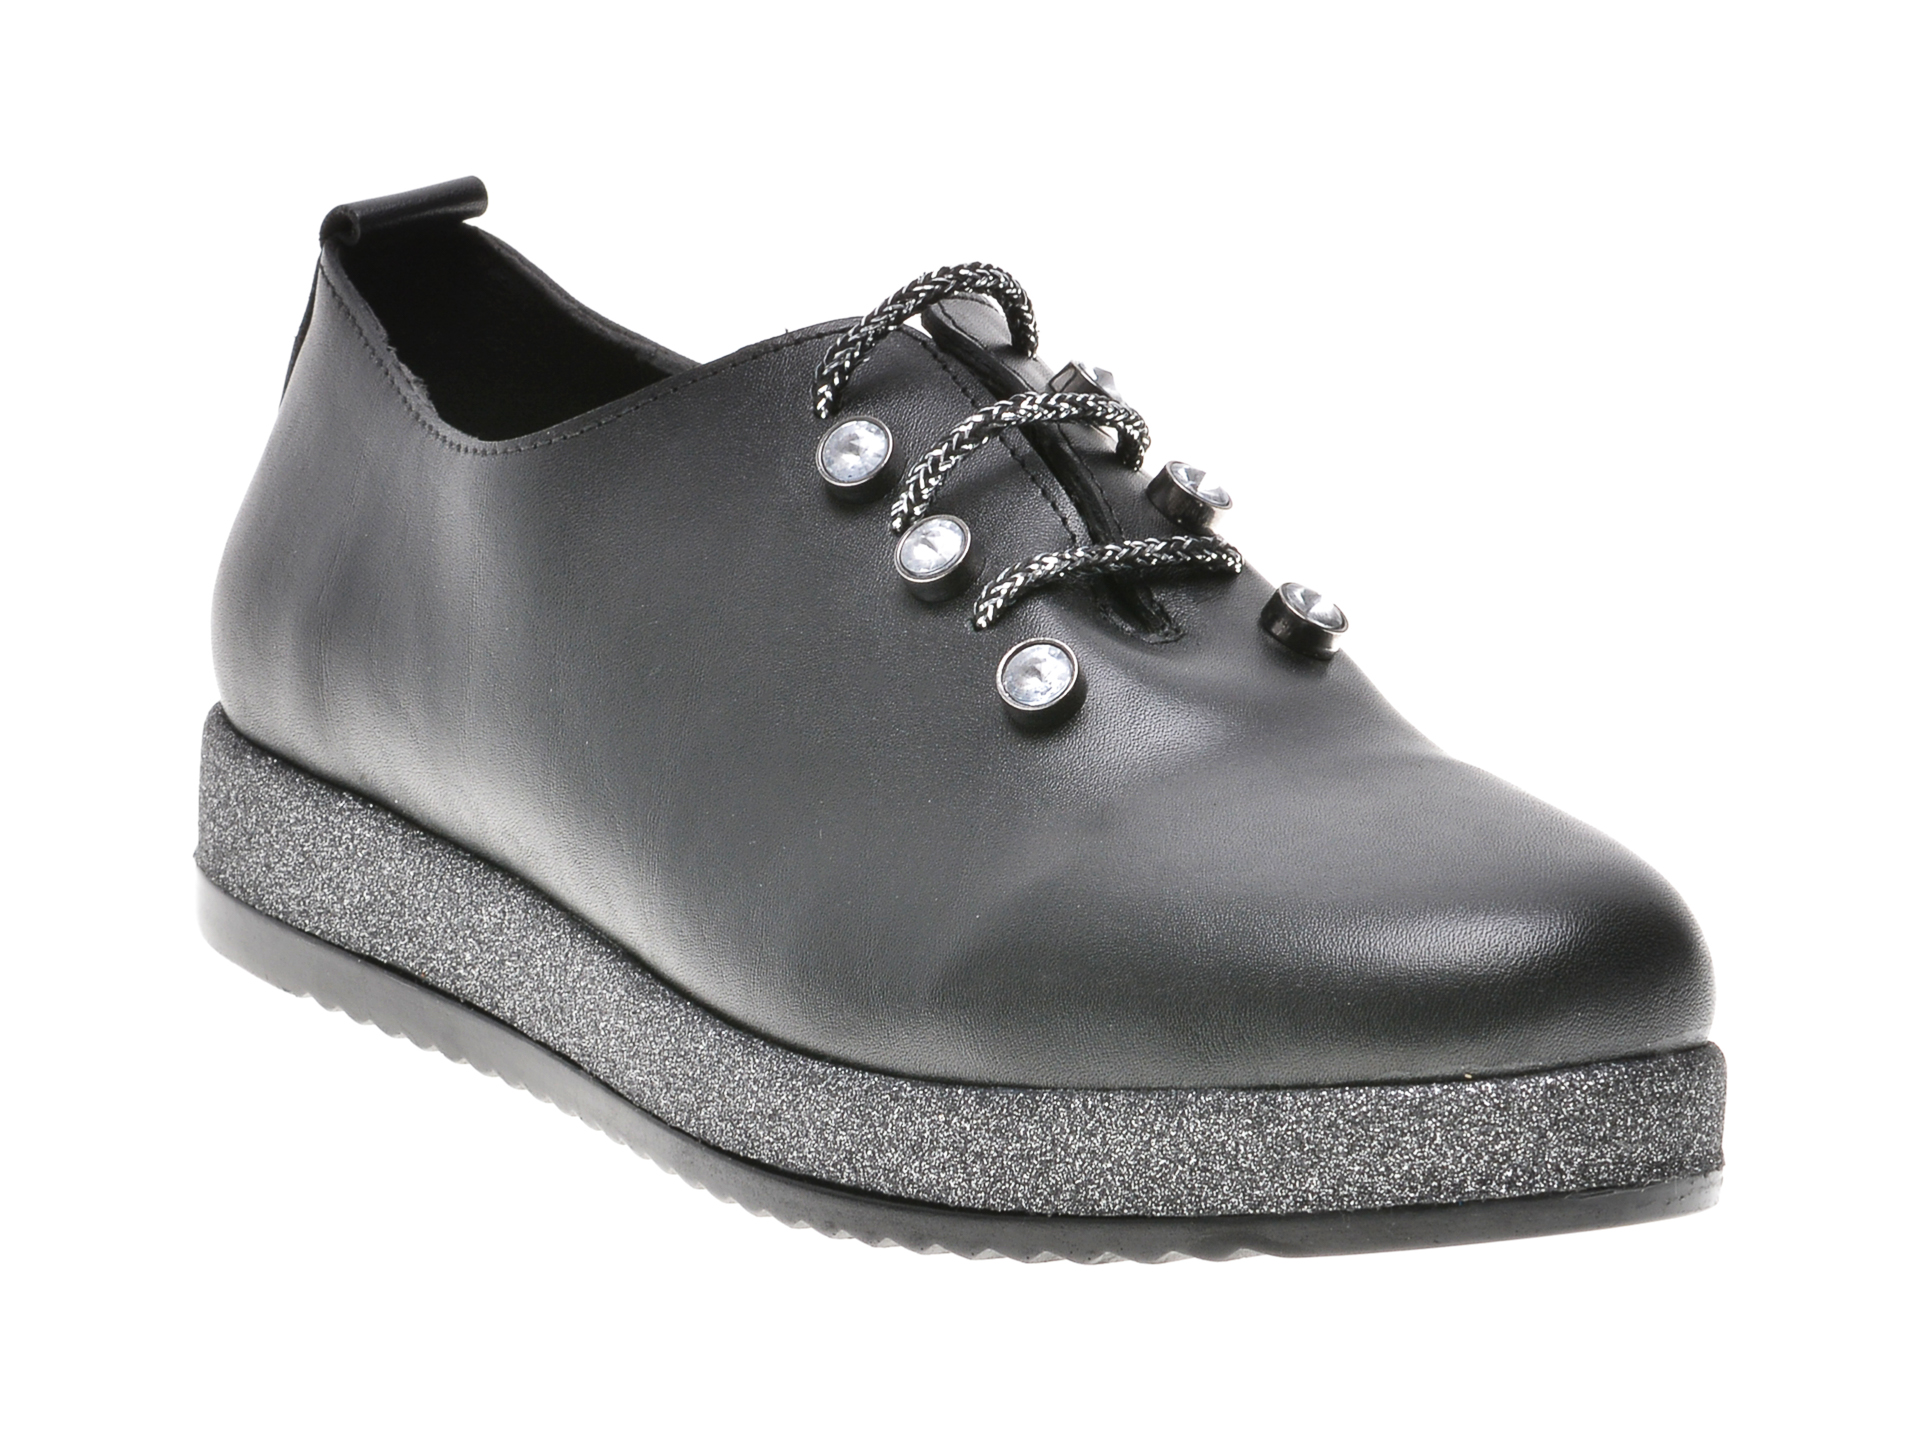 Pantofi FLAVIA PASSINI negri, Cl1905, din piele naturala